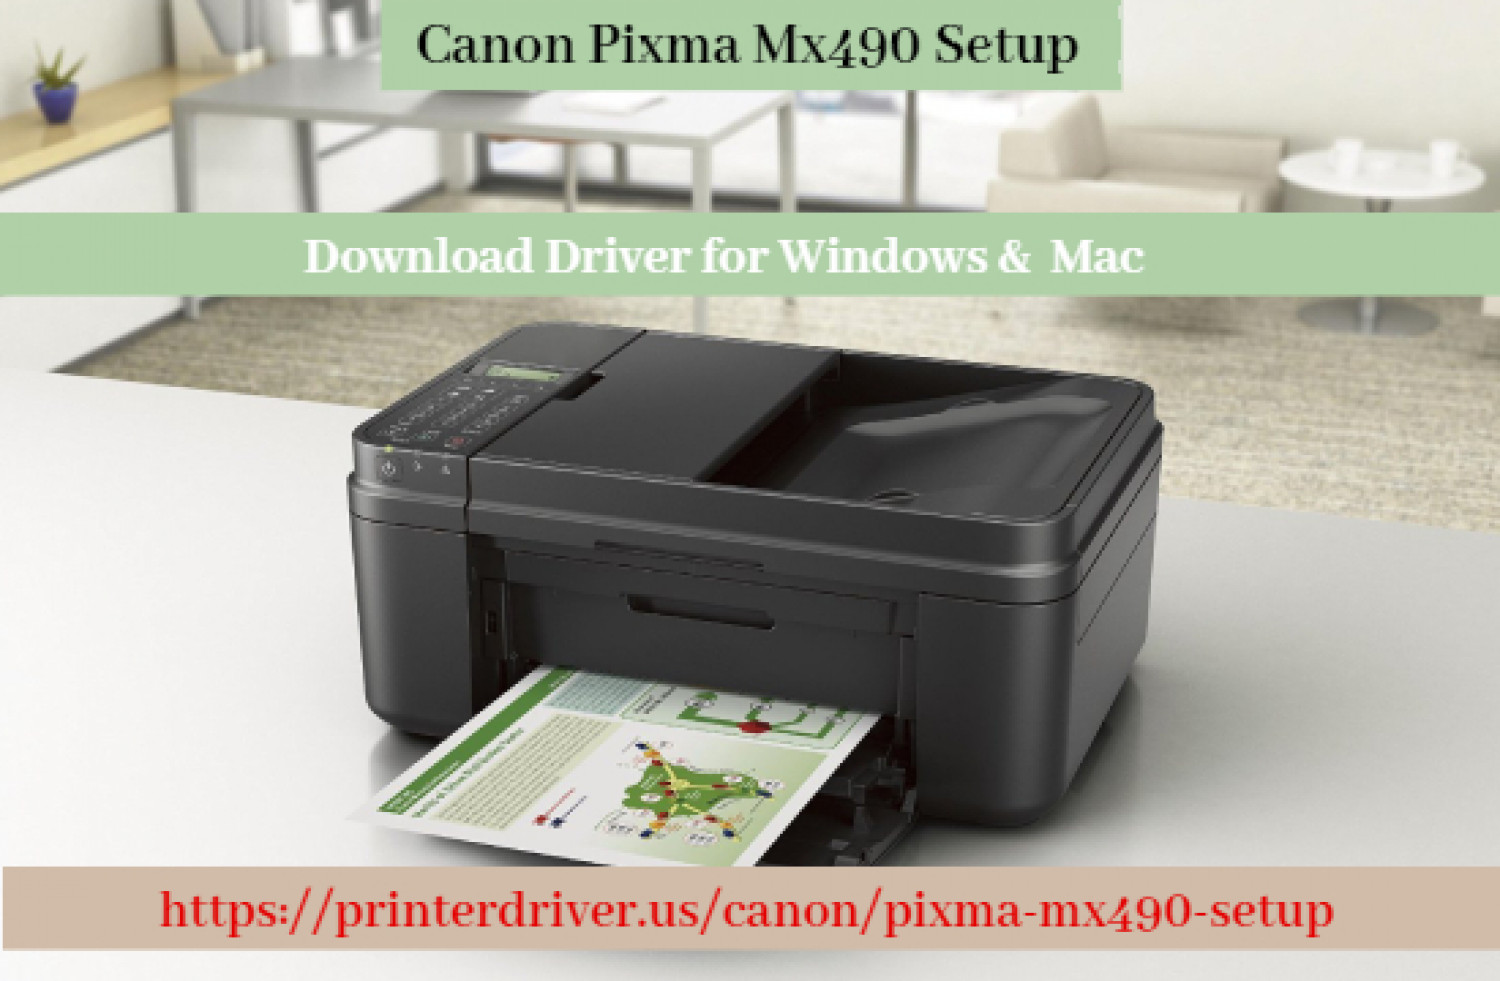 Canon Pixma Mx490 Setup - Download Driver for Windows, Mac Infographic